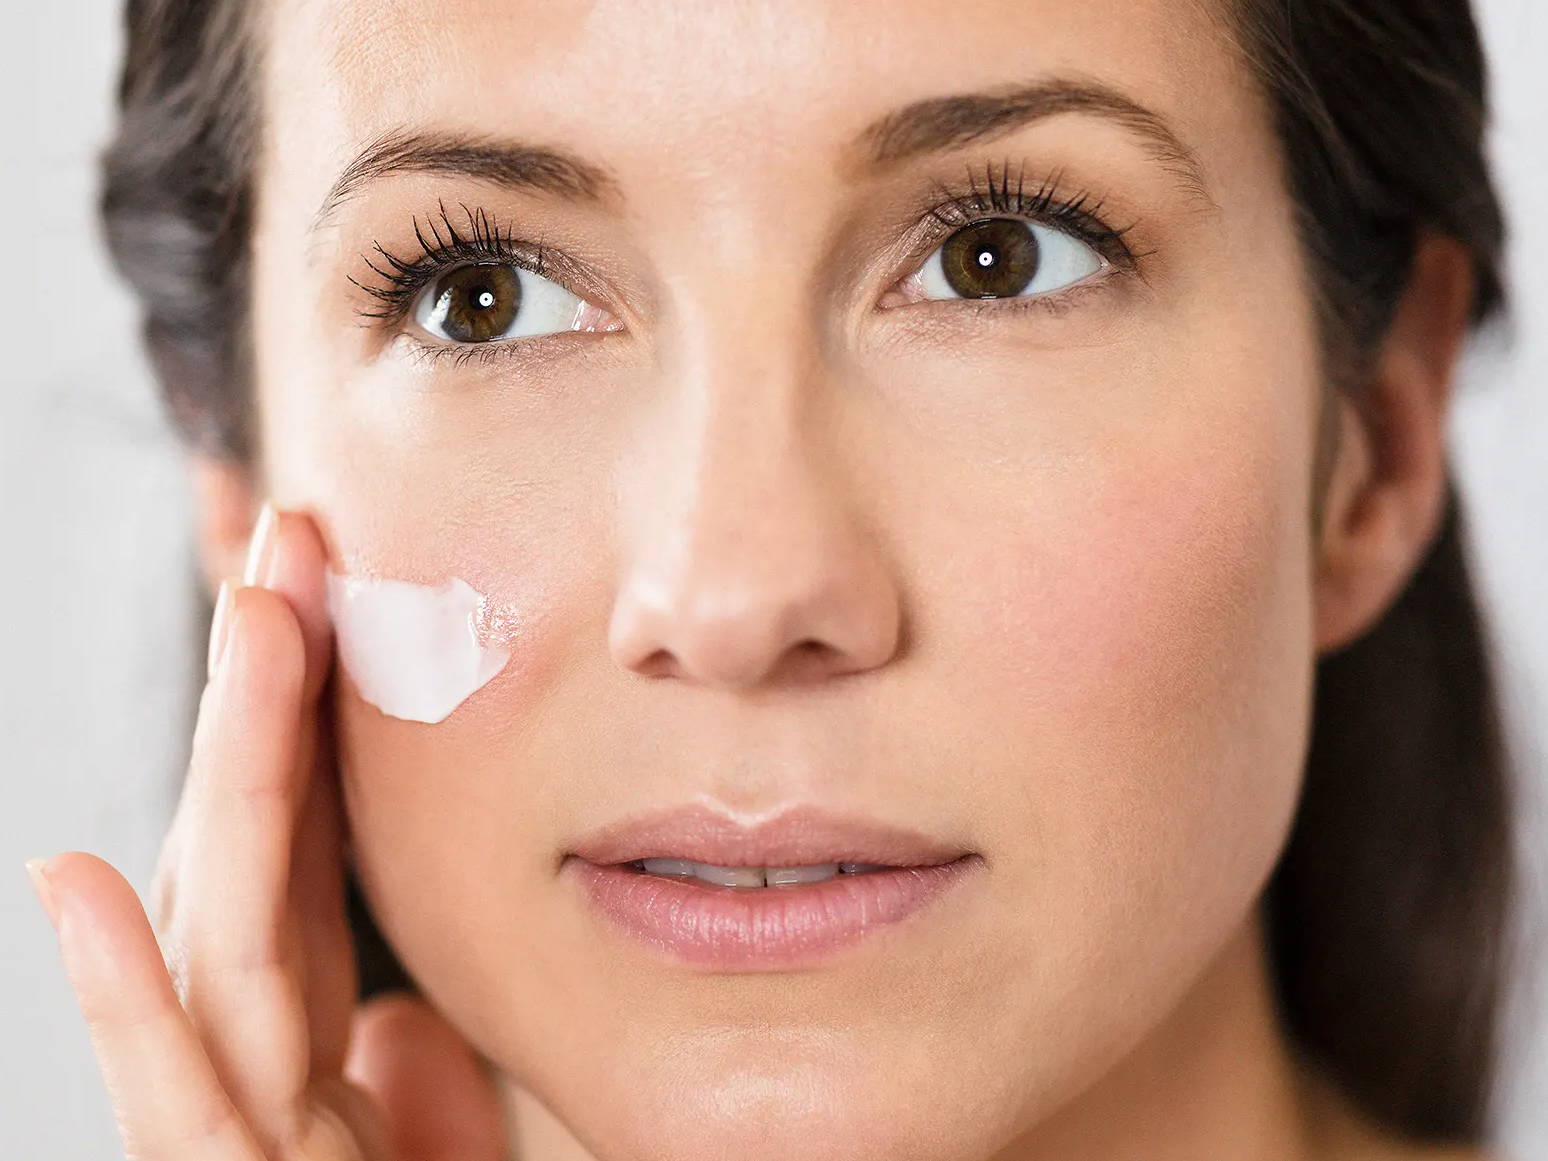 Applying Sobel Skin Facial Cream